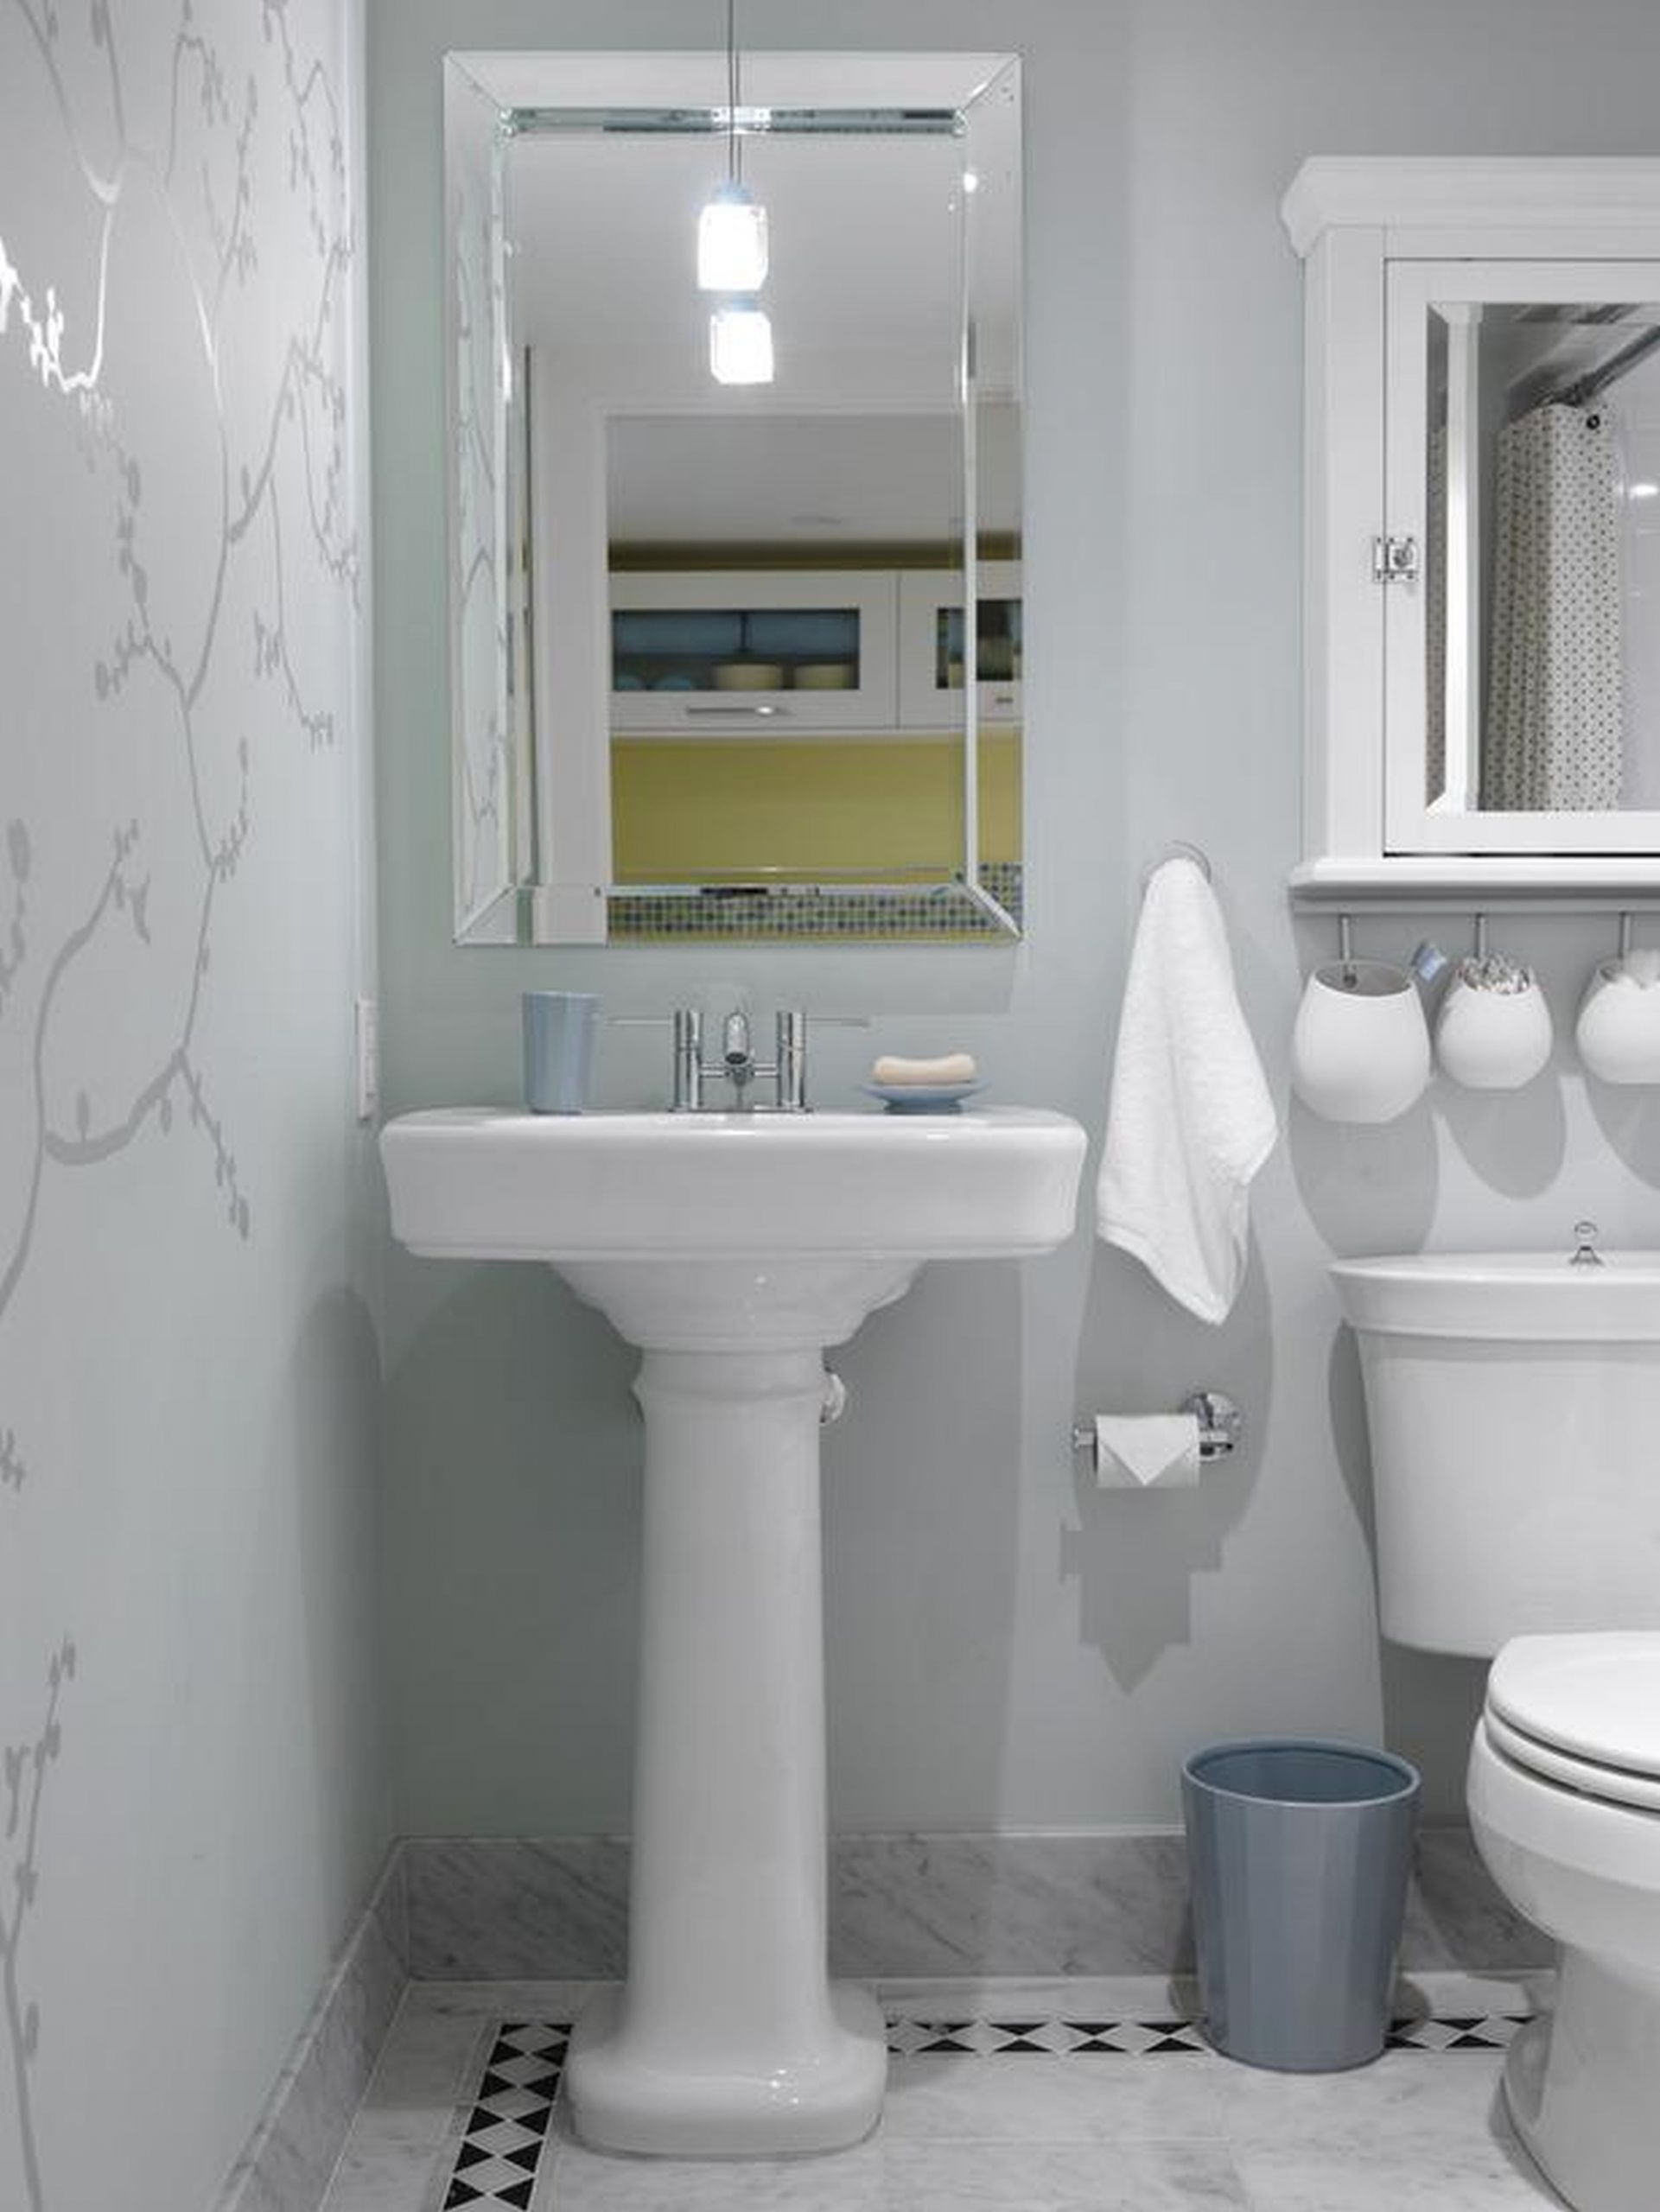 Basement Bathroom Ideas Small Spaces
 Small Bathroom Space Ideas – HomesFeed